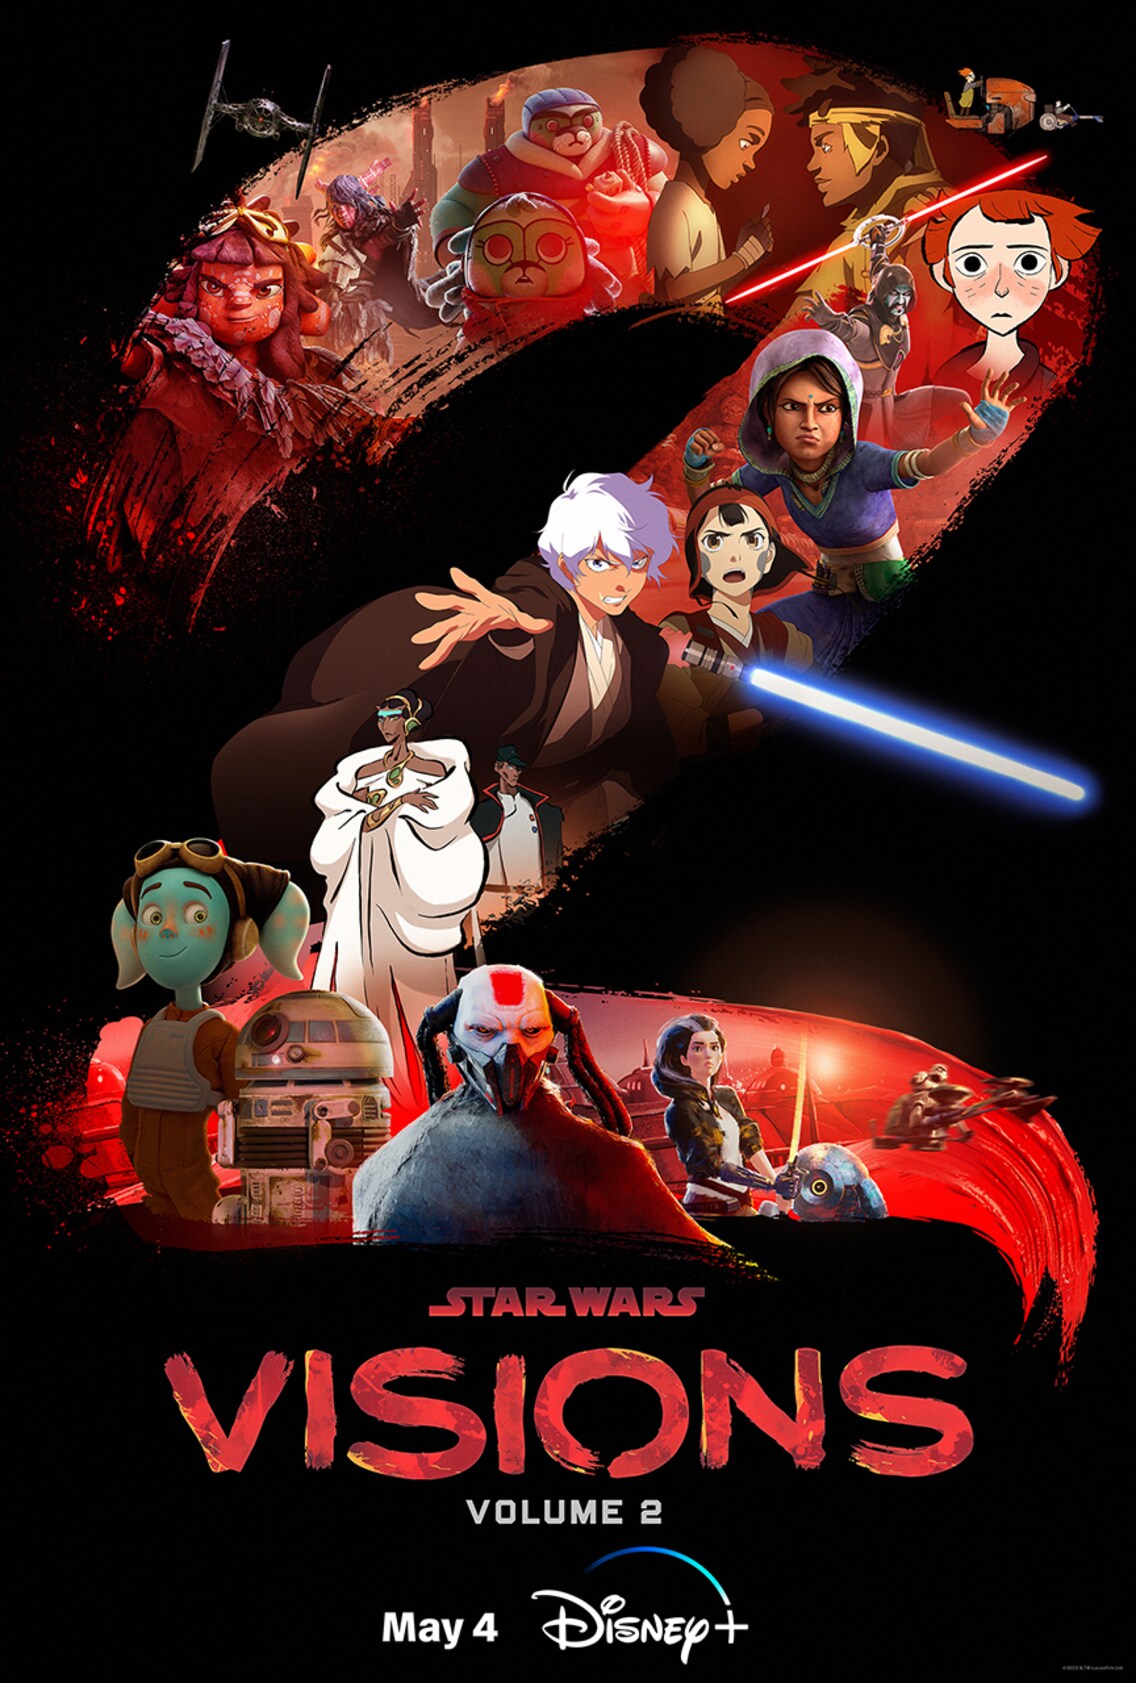 the following season 2 poster